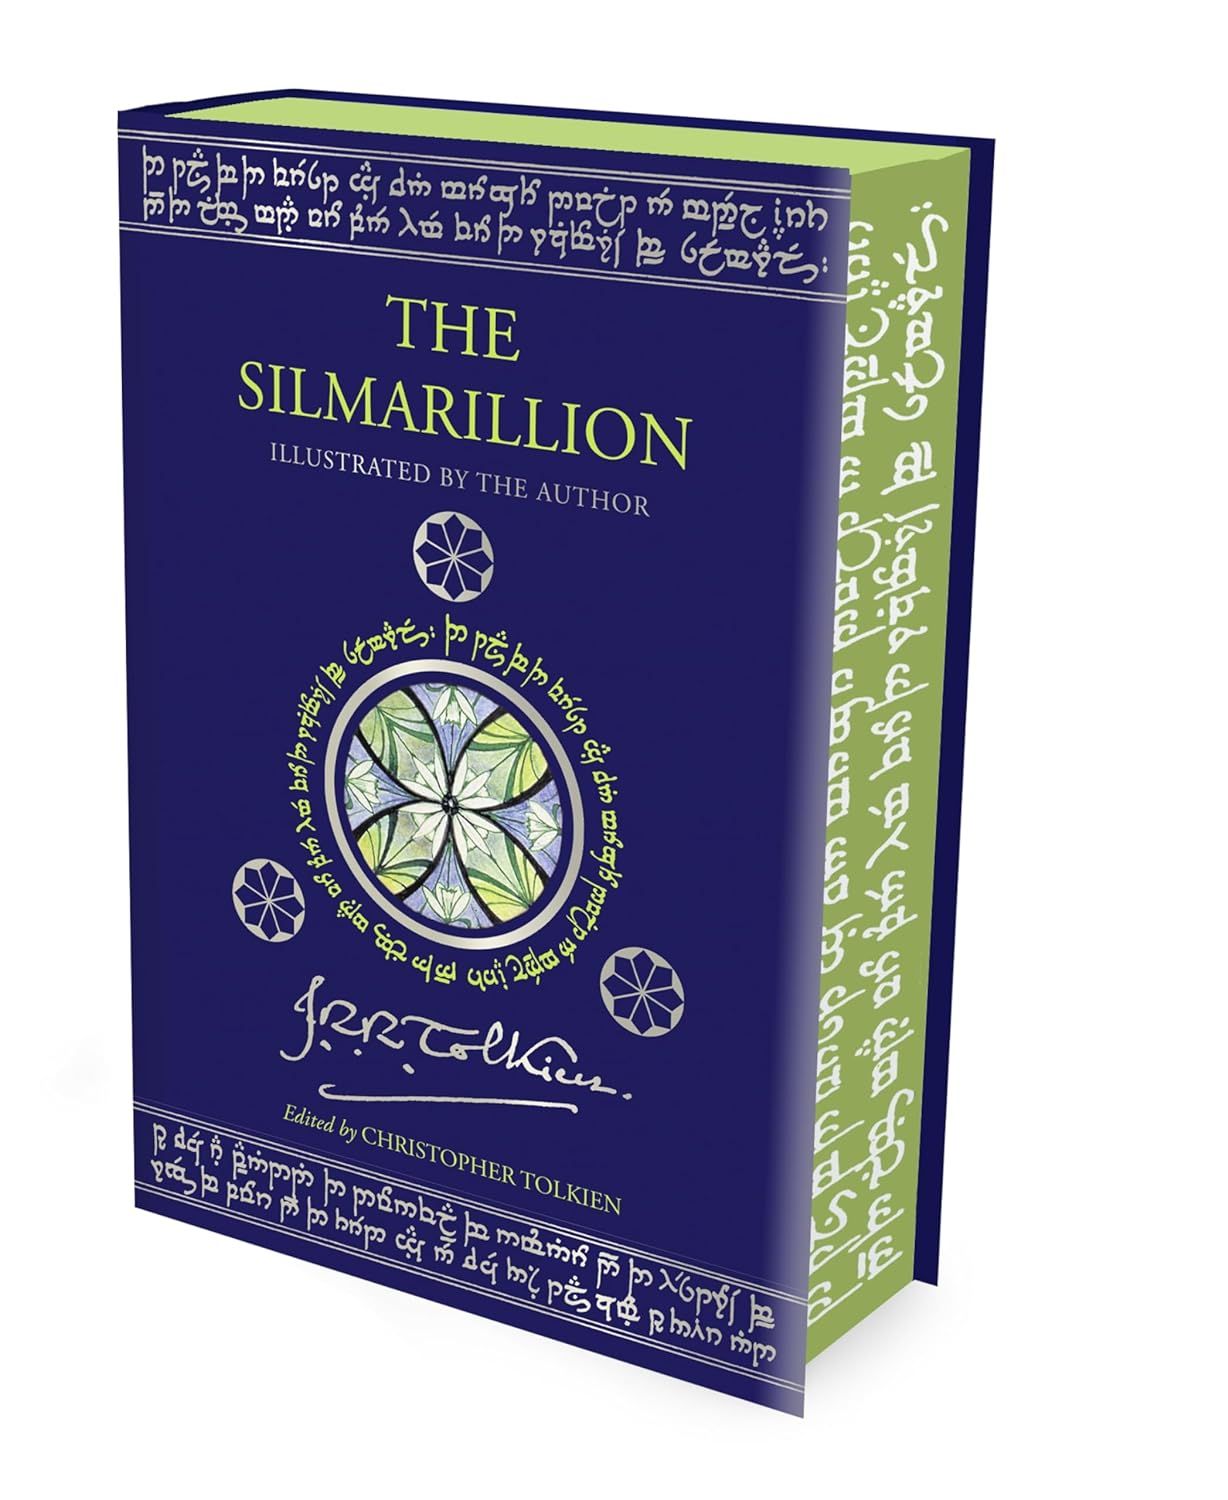 The Silmarillion: Illustrated by J.R.R. Tolkien